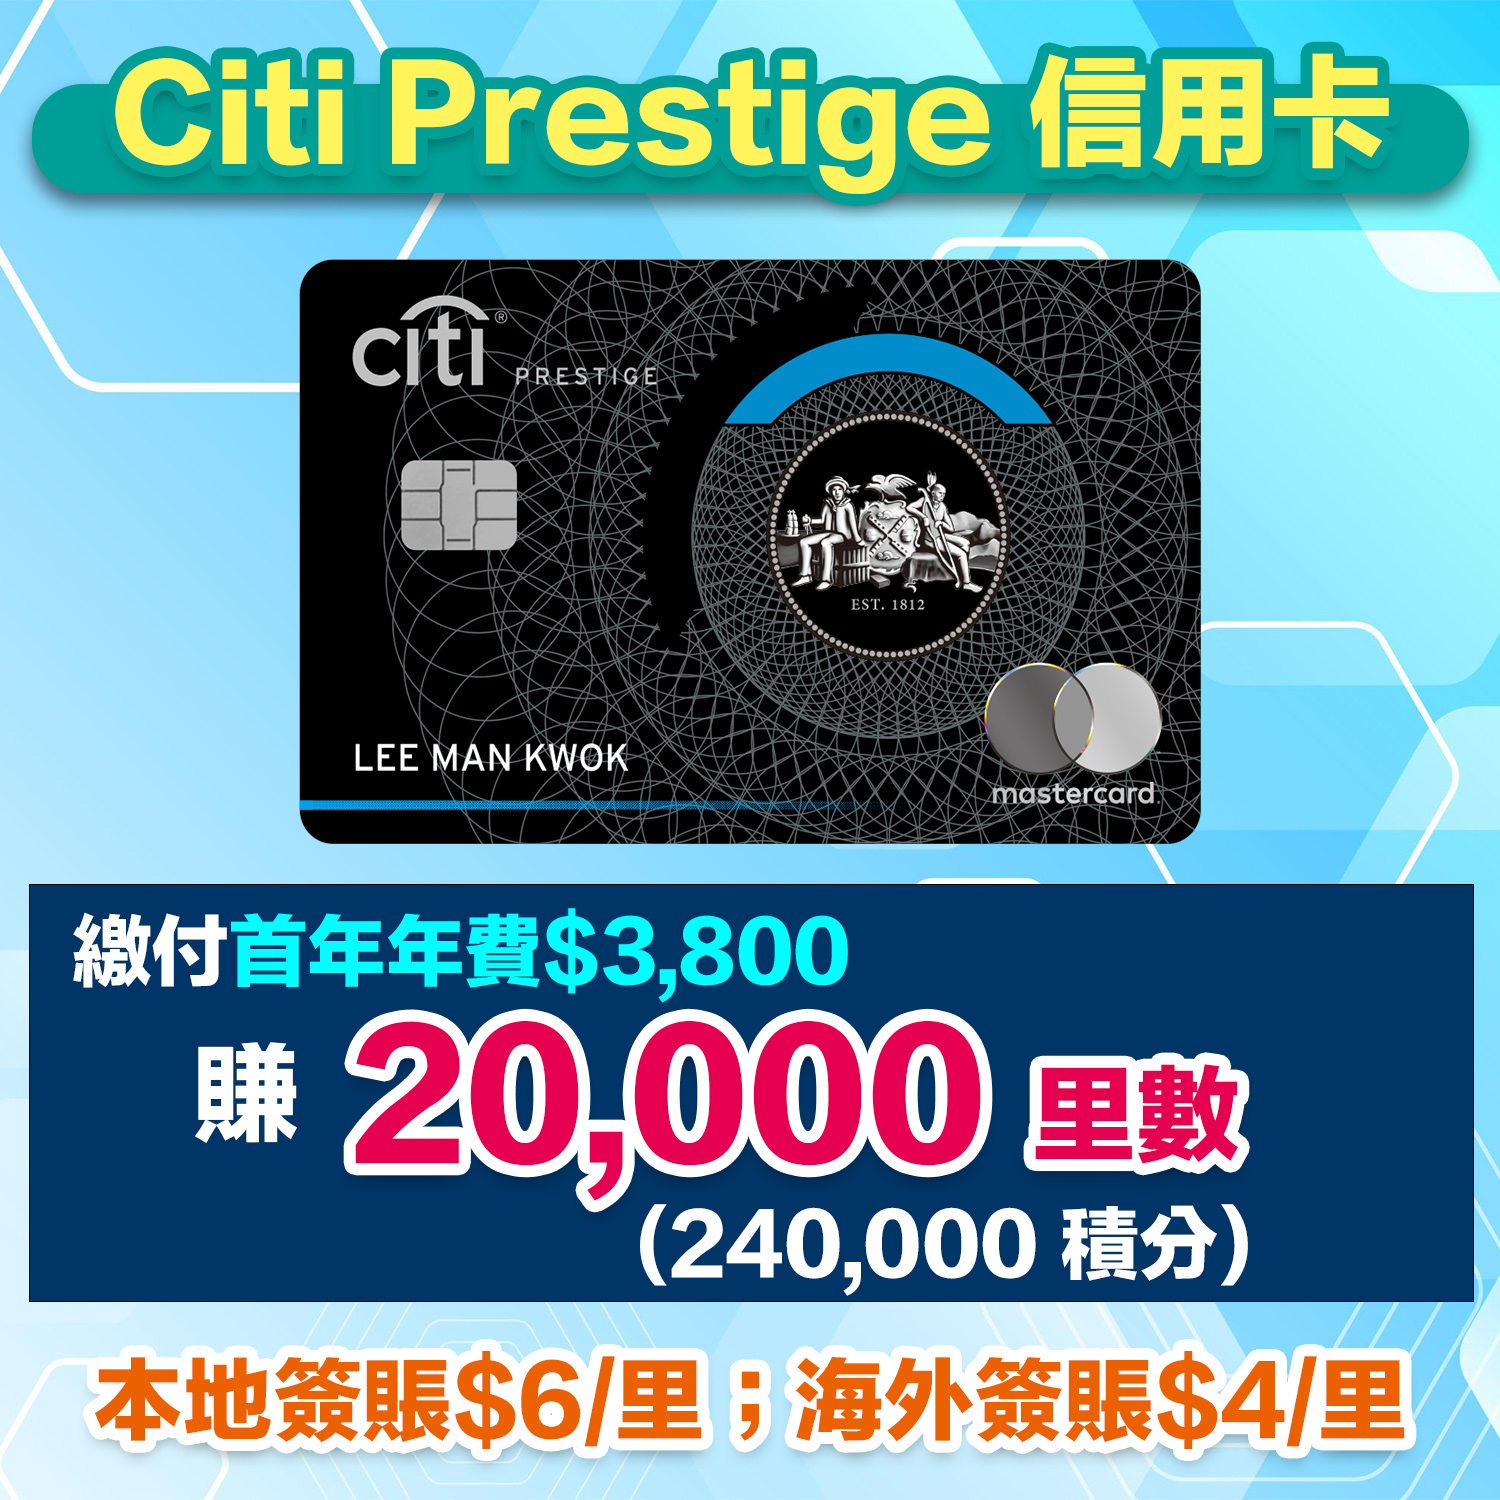 【Citi Prestige 信用卡】本地5星酒店住1晚送1晚 米芝蓮官方合作夥伴 平日HK$6=1里可換多個里數計劃！年費HK$3,800 里先生送額外HK$1,500 Apple 禮品卡/超市現金券/豐澤電子現金券！